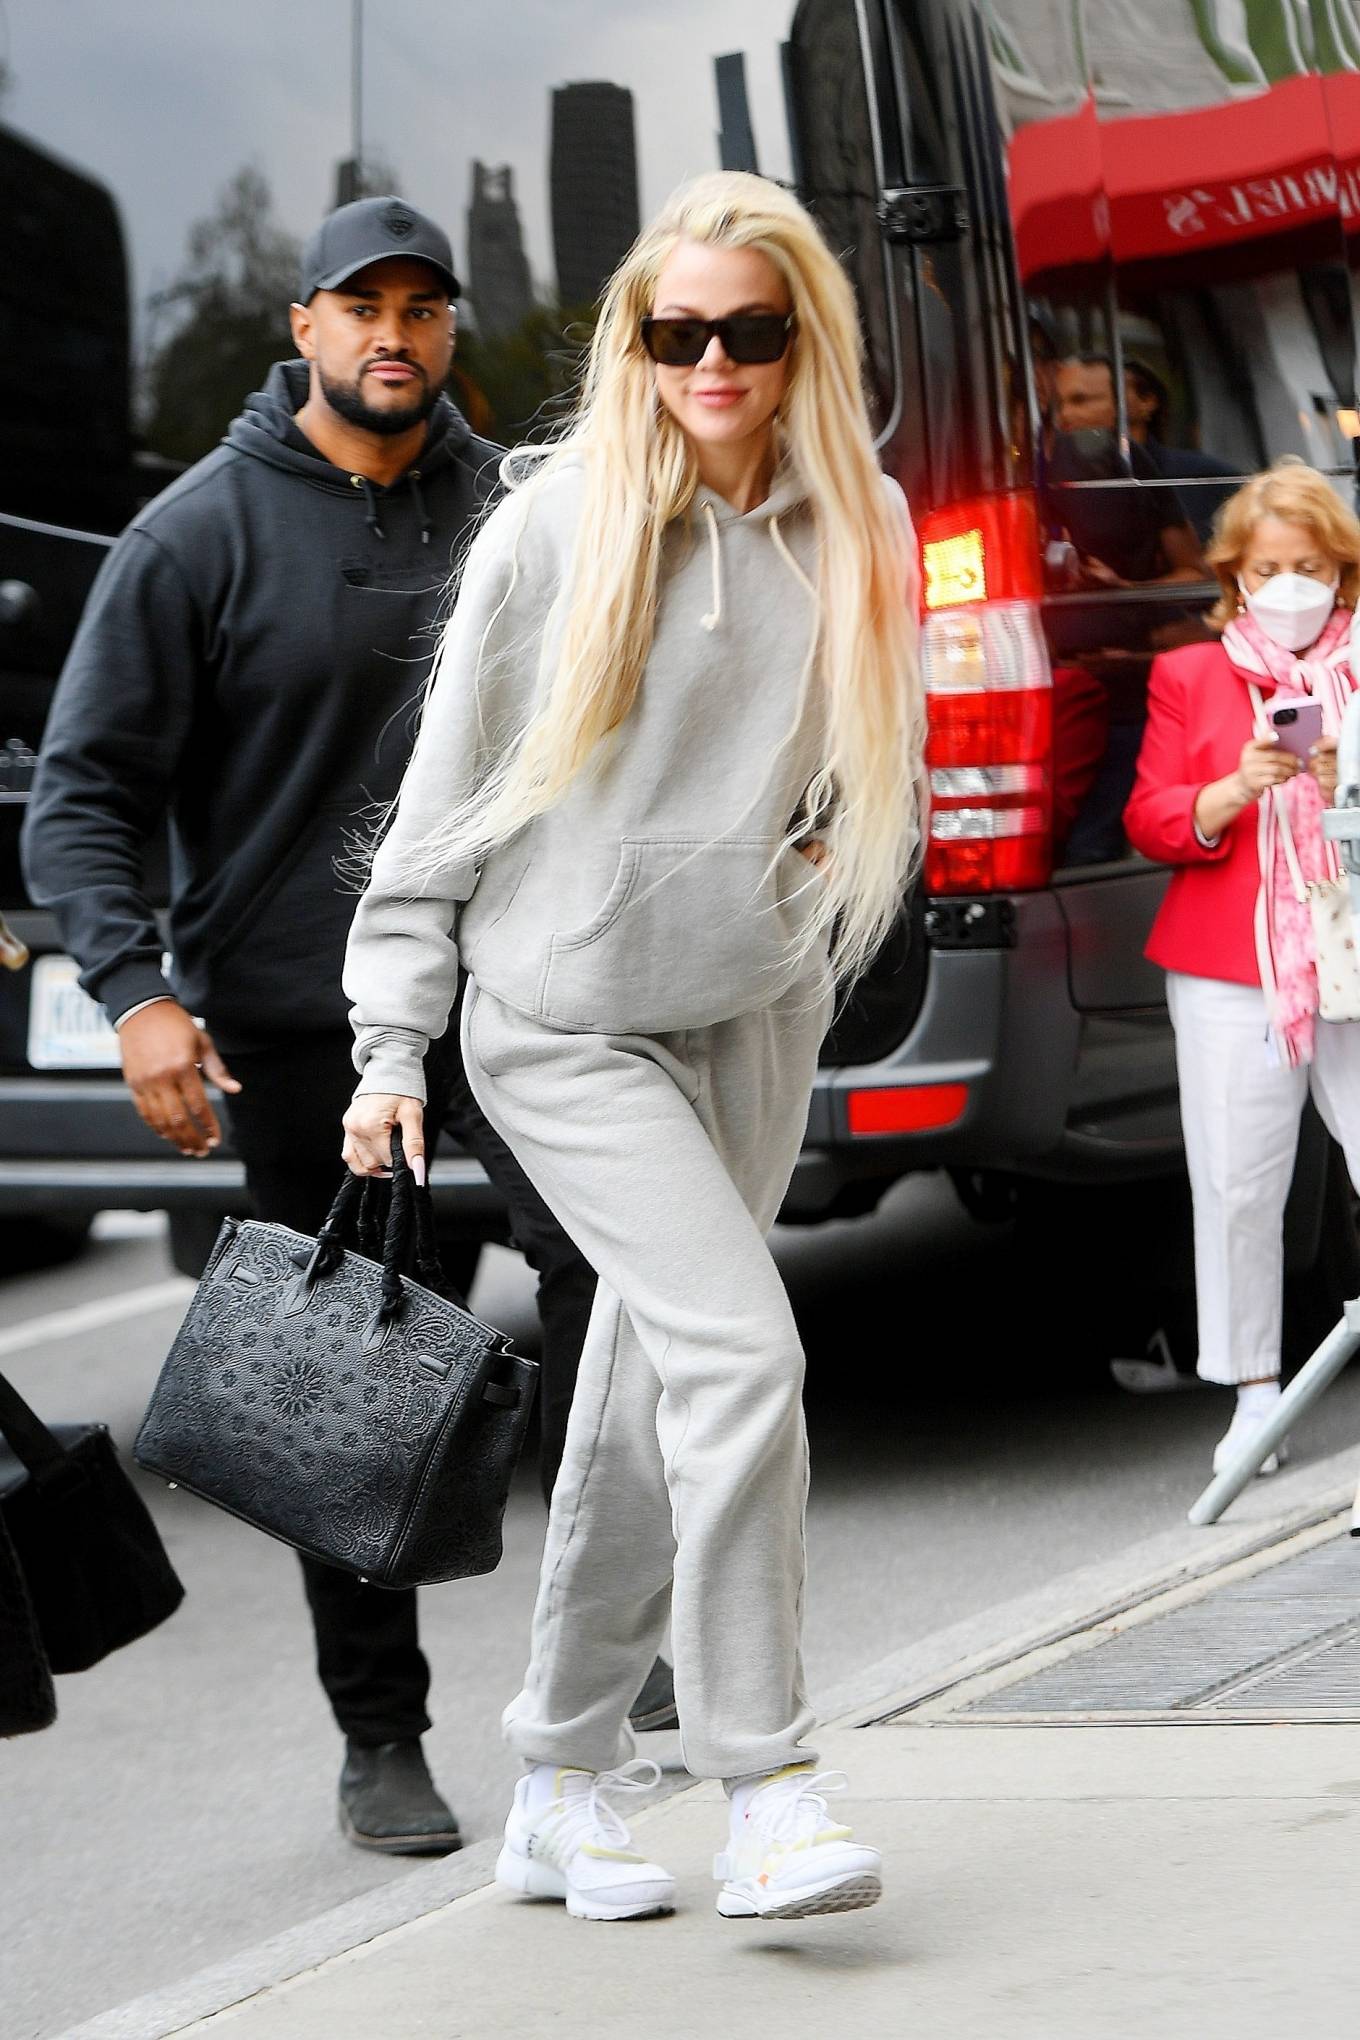 Khloe Kardashian â€“ In gray sweatpants steps out in New